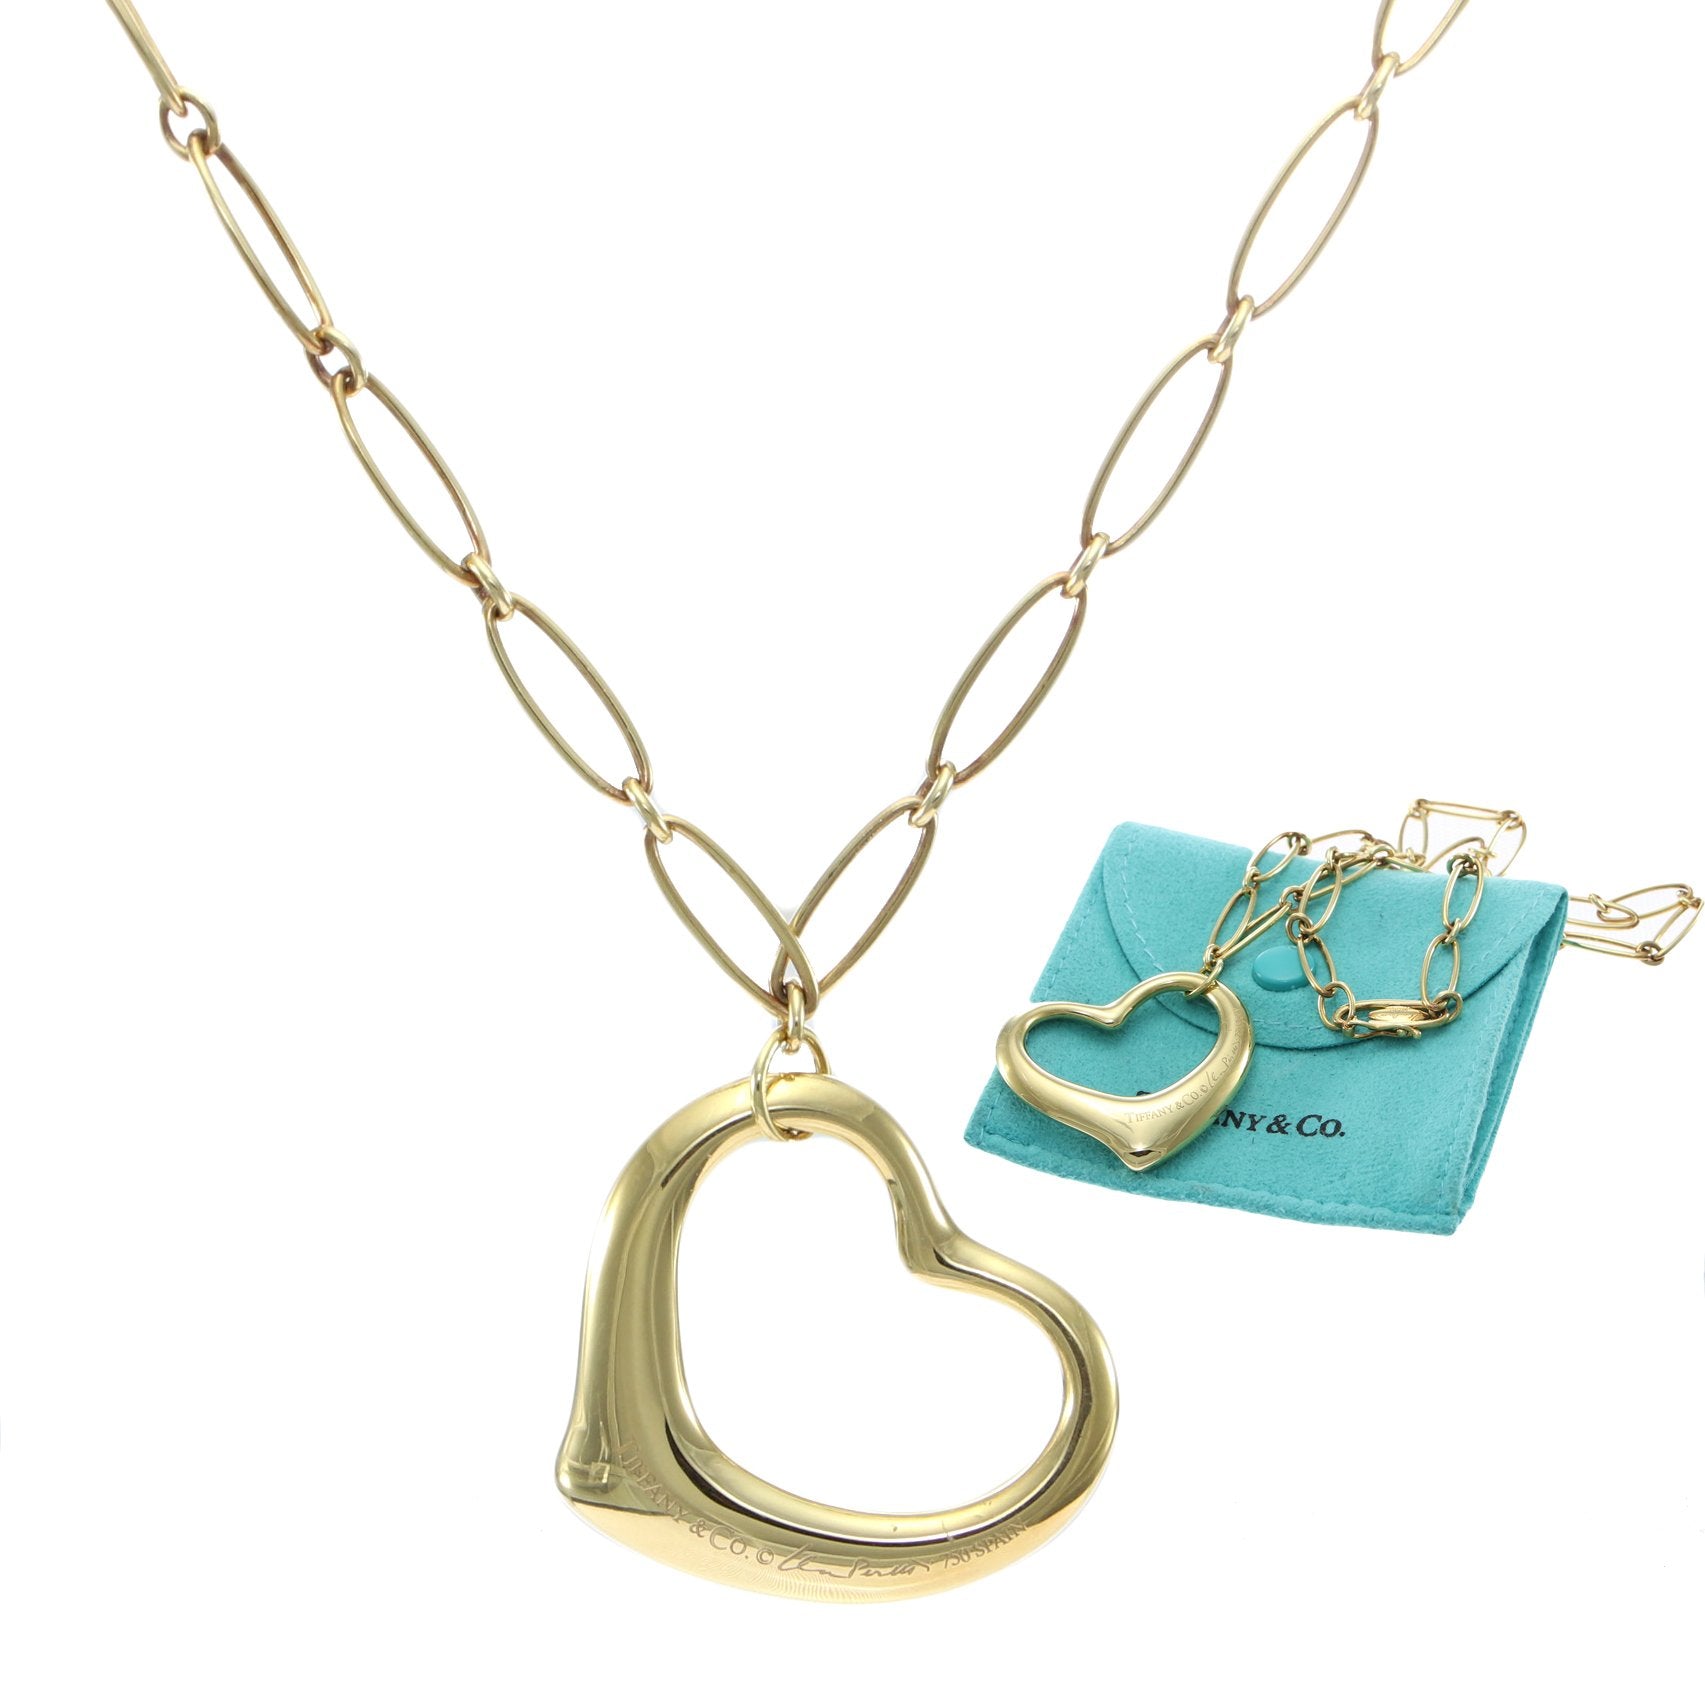 Tiffany & Co. Elsa Peretti Large Open Heart Pendant Chain Necklace 18k Gold  36mm